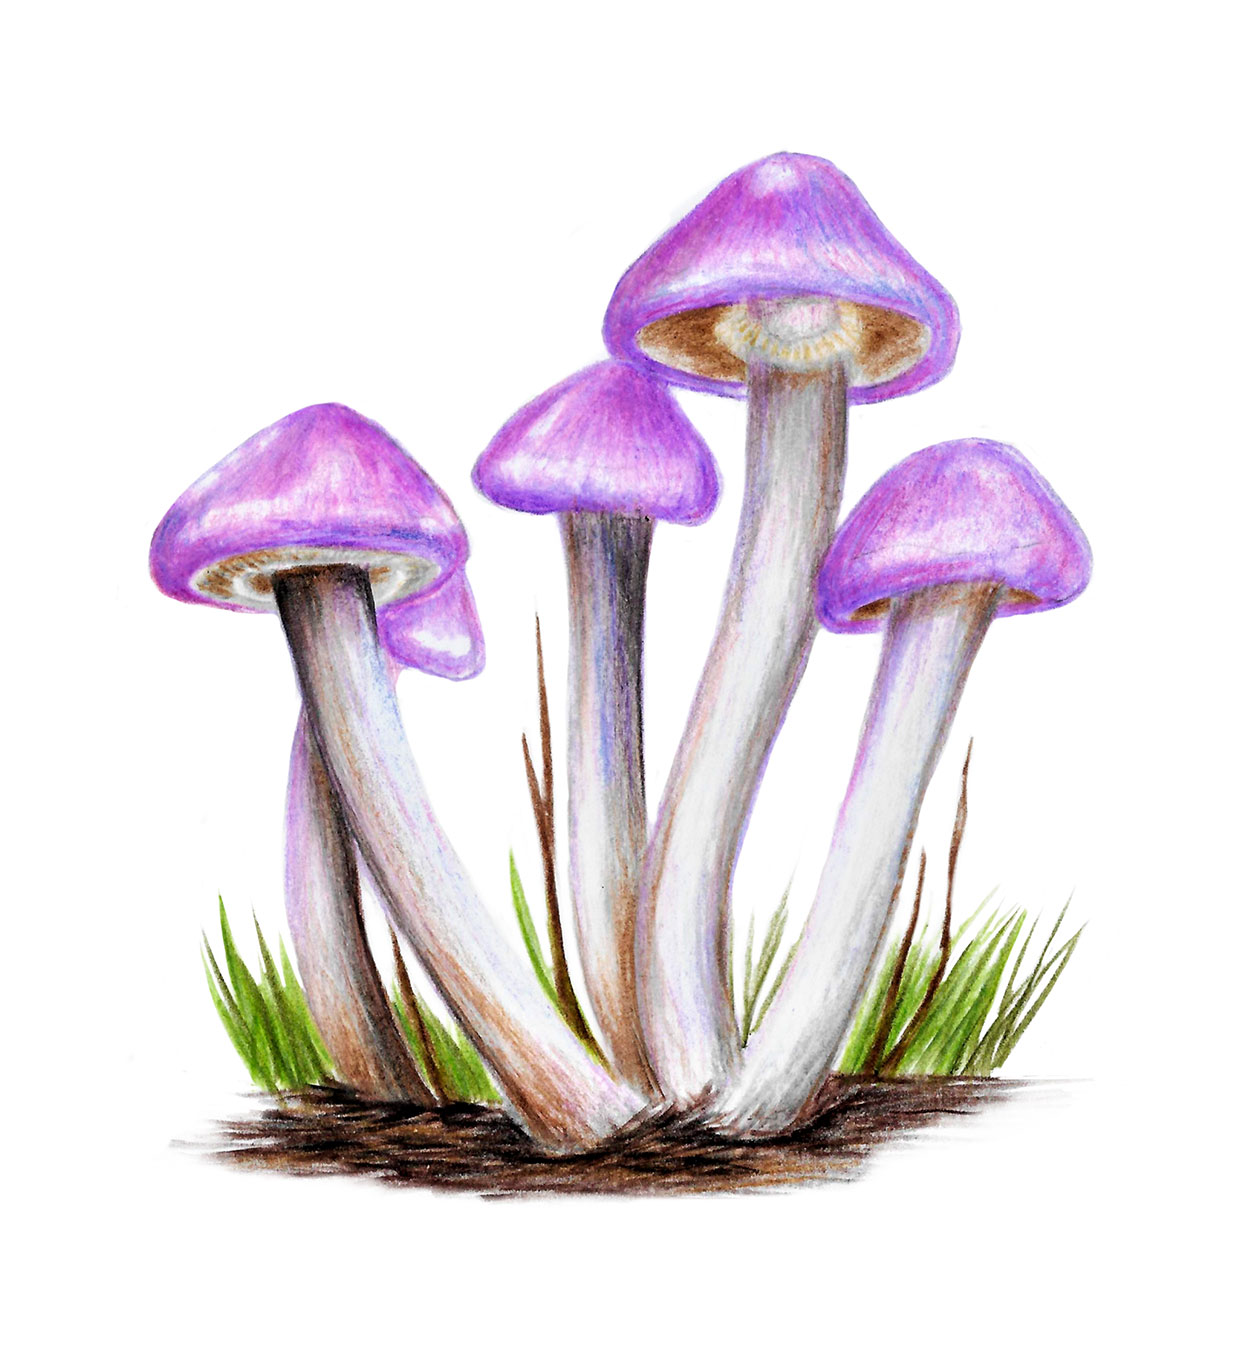 Macrohongo - Hongo de sombrero violeta